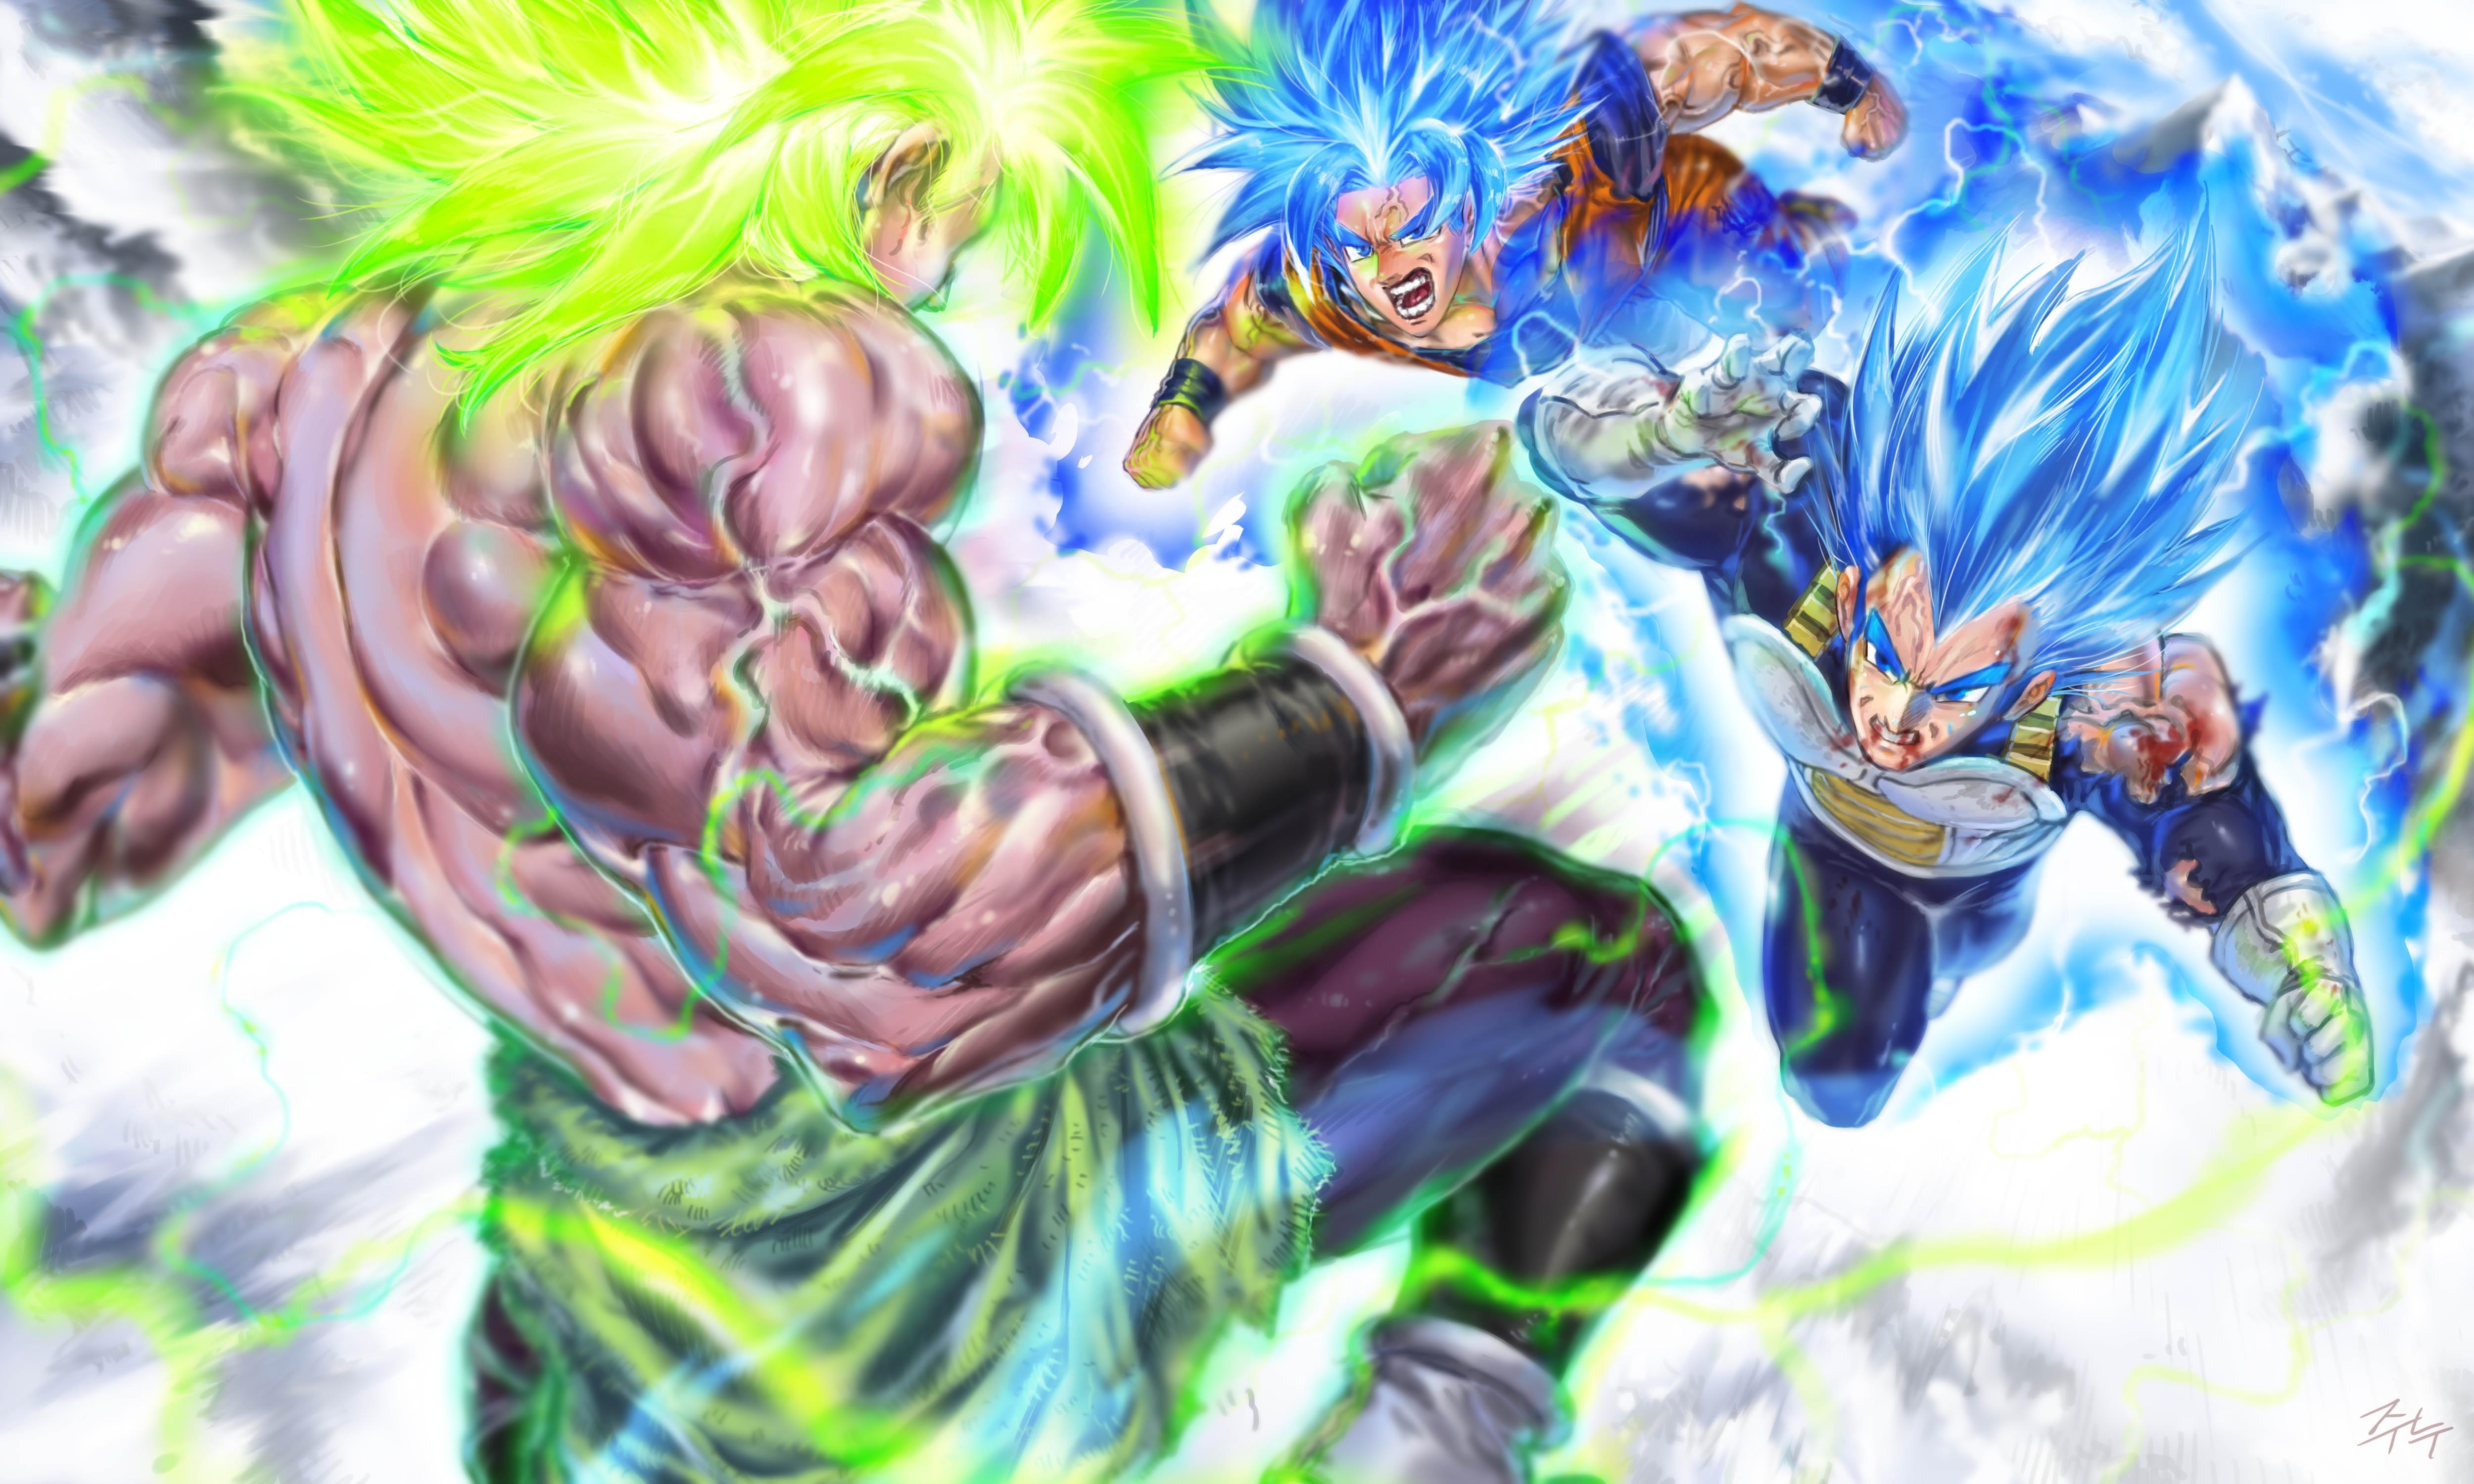 Broly Vs Goku and Vegeta 4k Ultra HD Wallpaper. Background Image